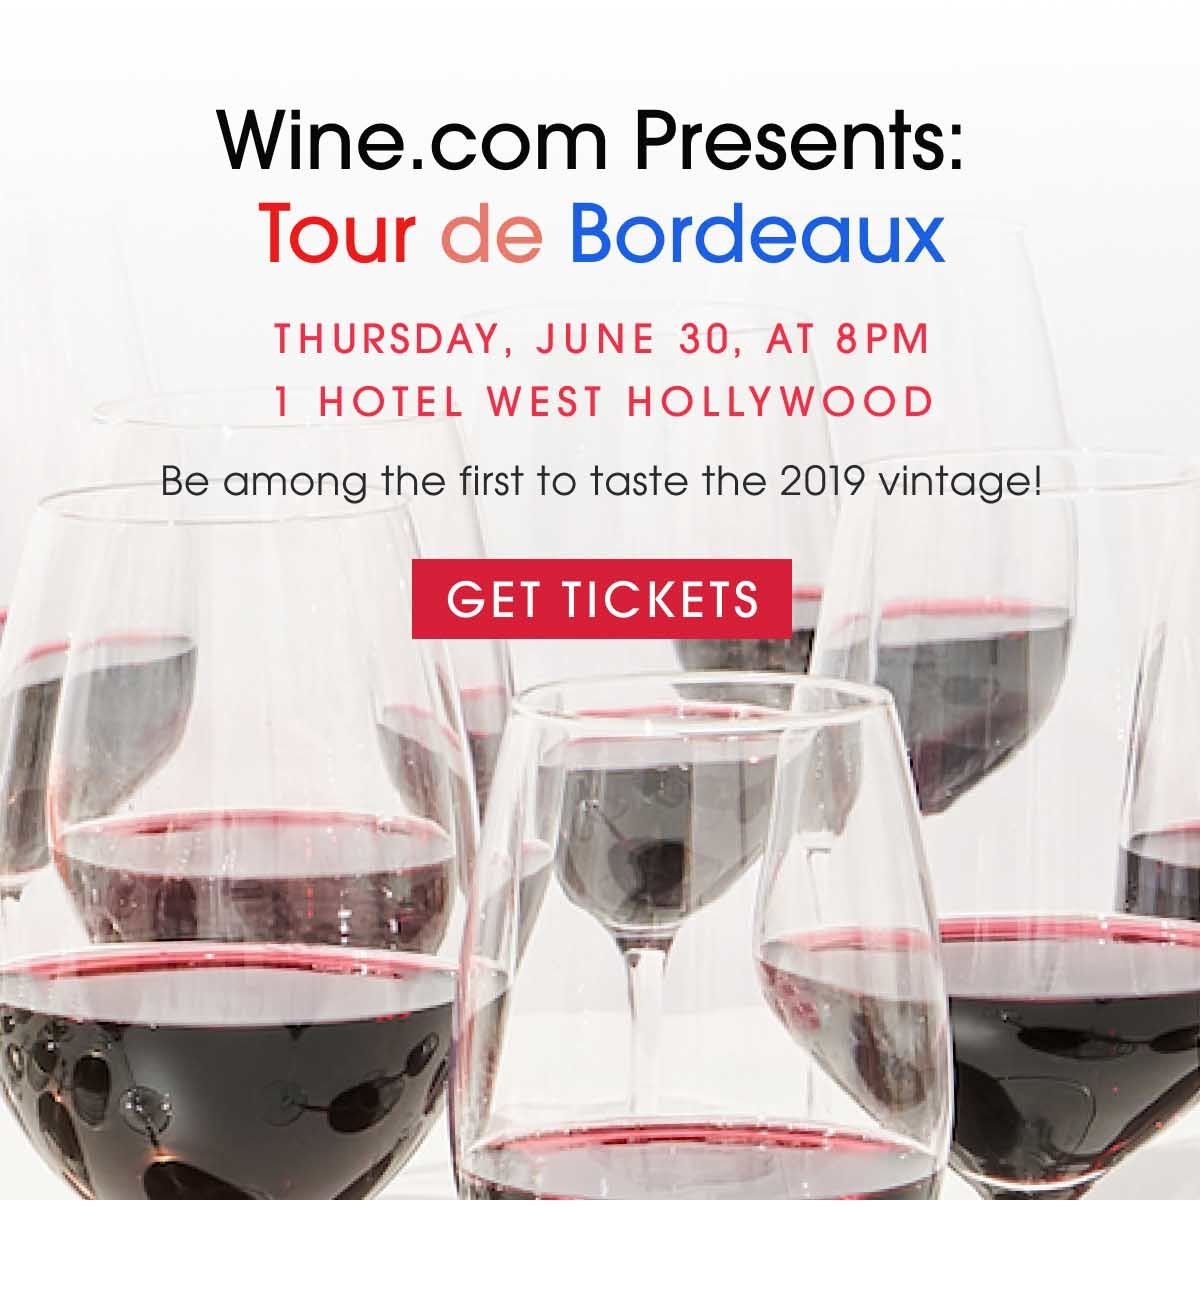 Wine.com presents Tour de Bordeaux - Be among the first to taste the 2019 vintage!